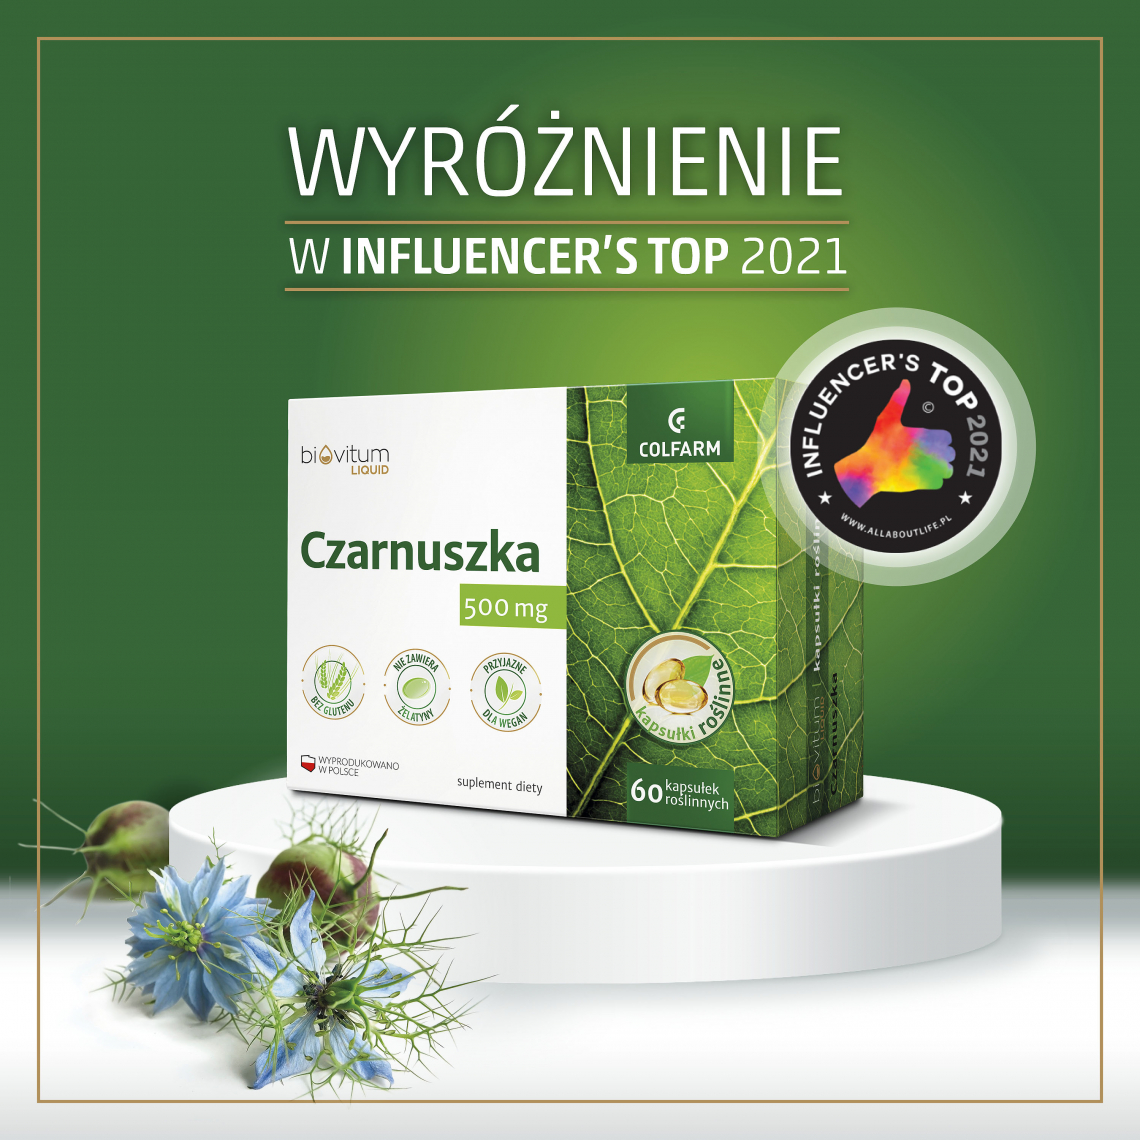 Biovitum Liquid Czarnusza Laureatem Plebiscytu Influencer’s Top 2021